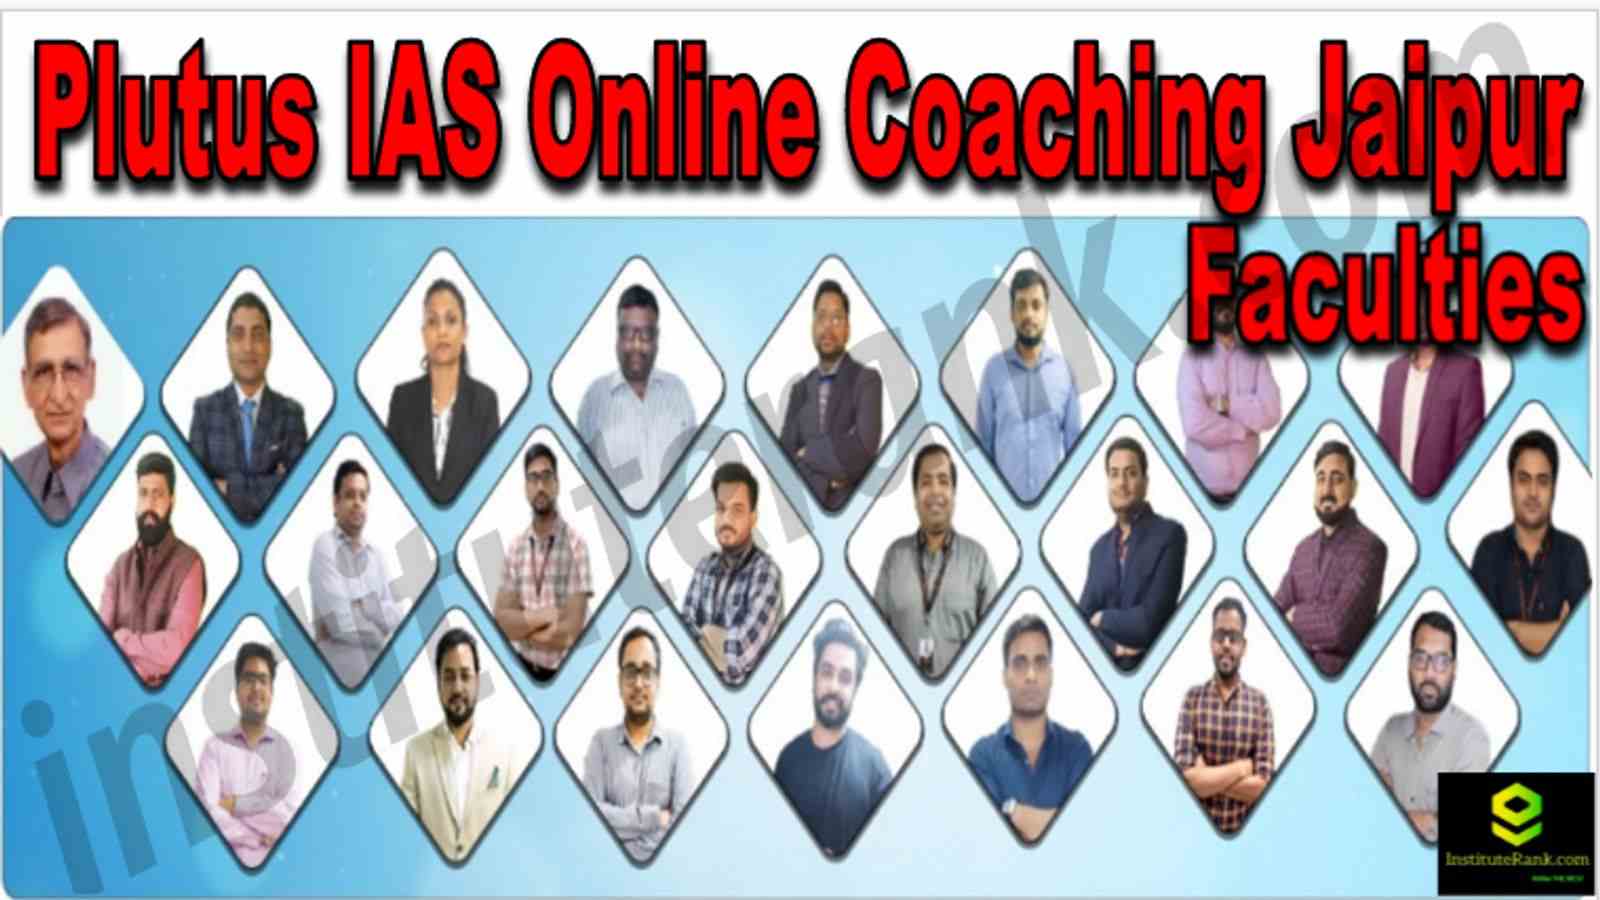 Plutus IAS Online Coaching Jaipur Reviews Faculties